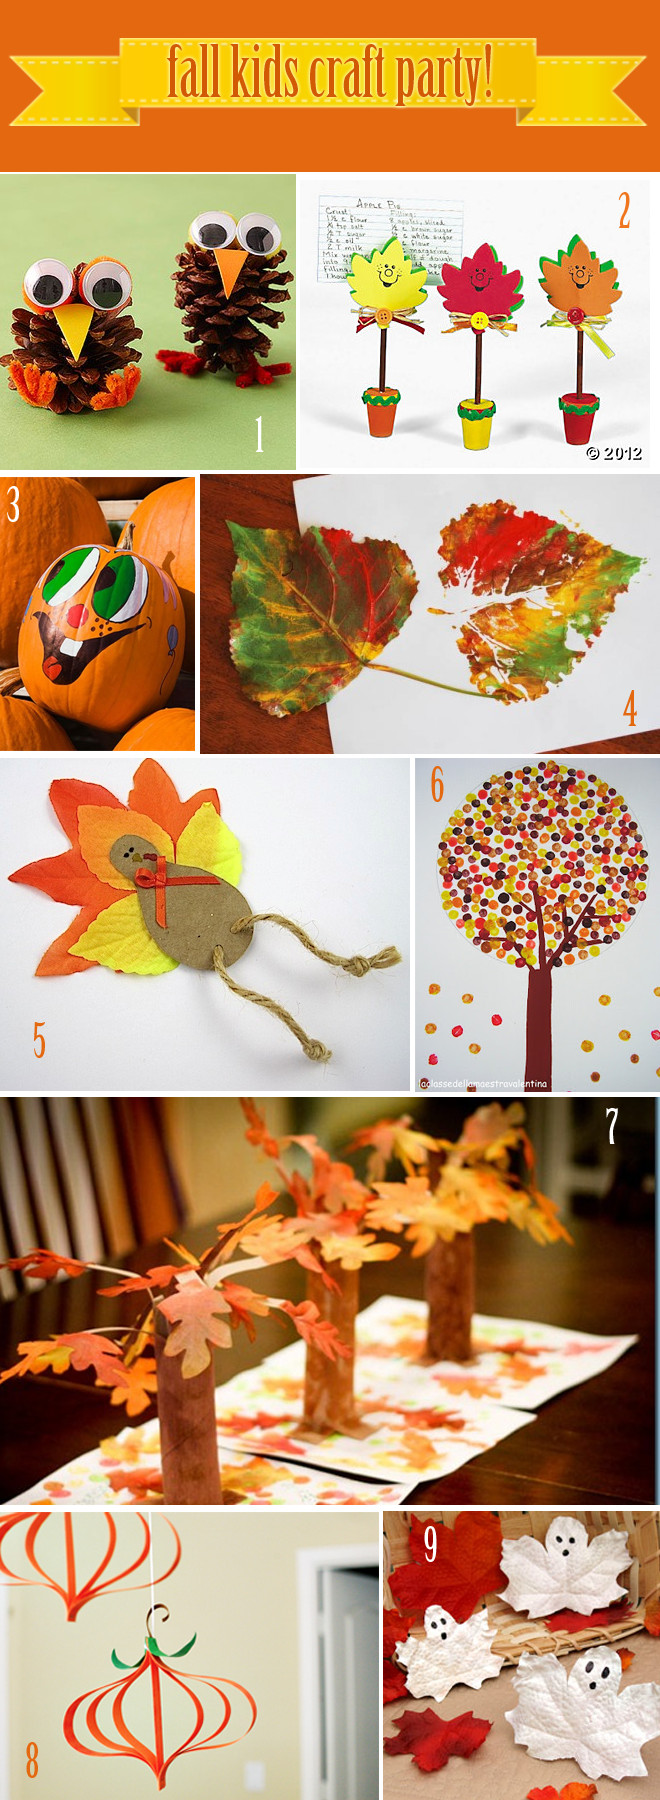 Kids Fall Crafts Ideas
 9 Fall Craft Ideas For Kids